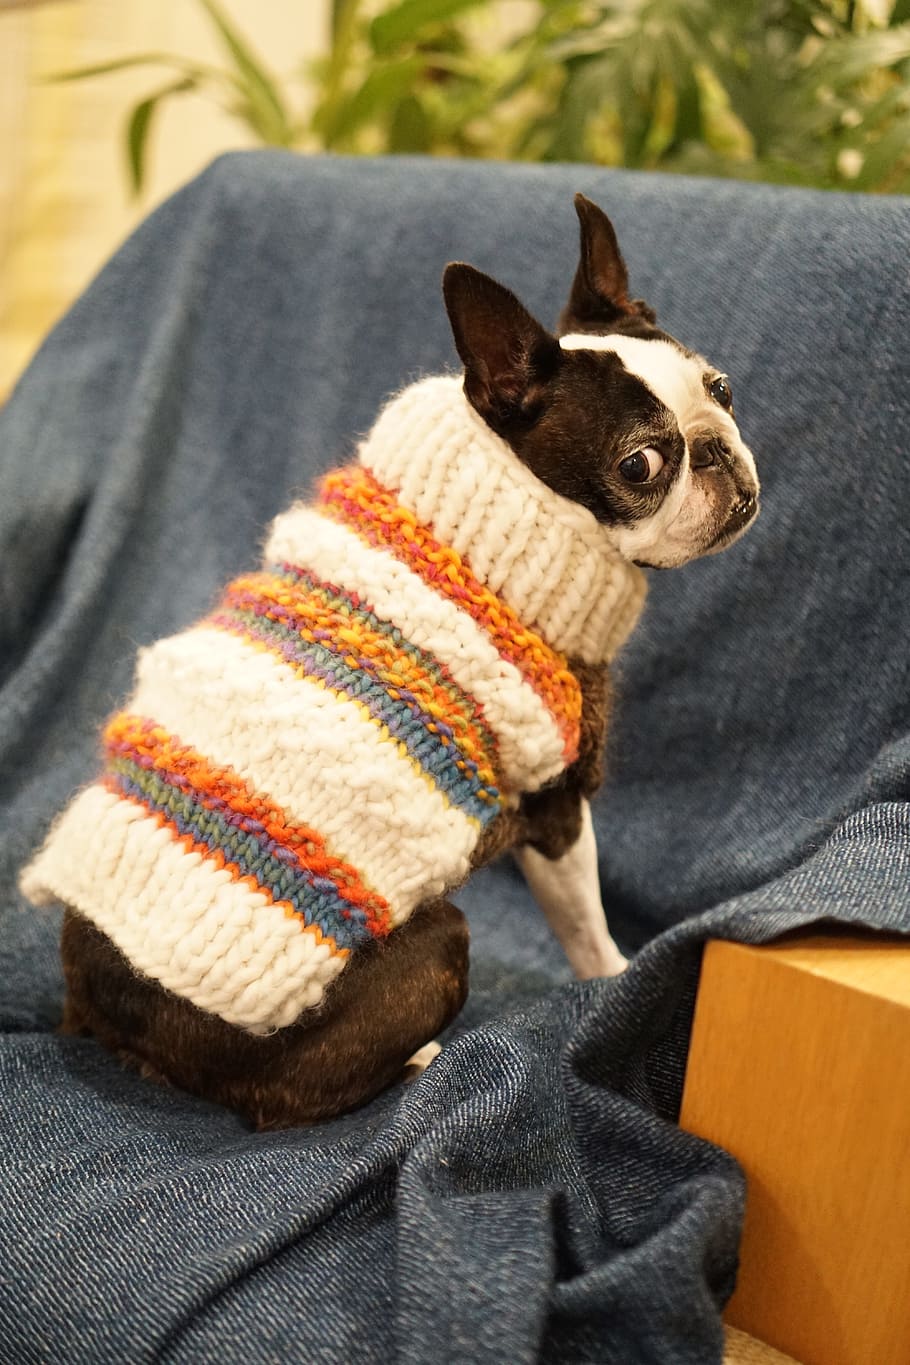 Boston Terrier, Hewan Peliharaan, Anjing, anjing jenis kecil, anjing dalam ruangan, sweater, pakaian anjing, sweater anjing, duduk, satu hewan